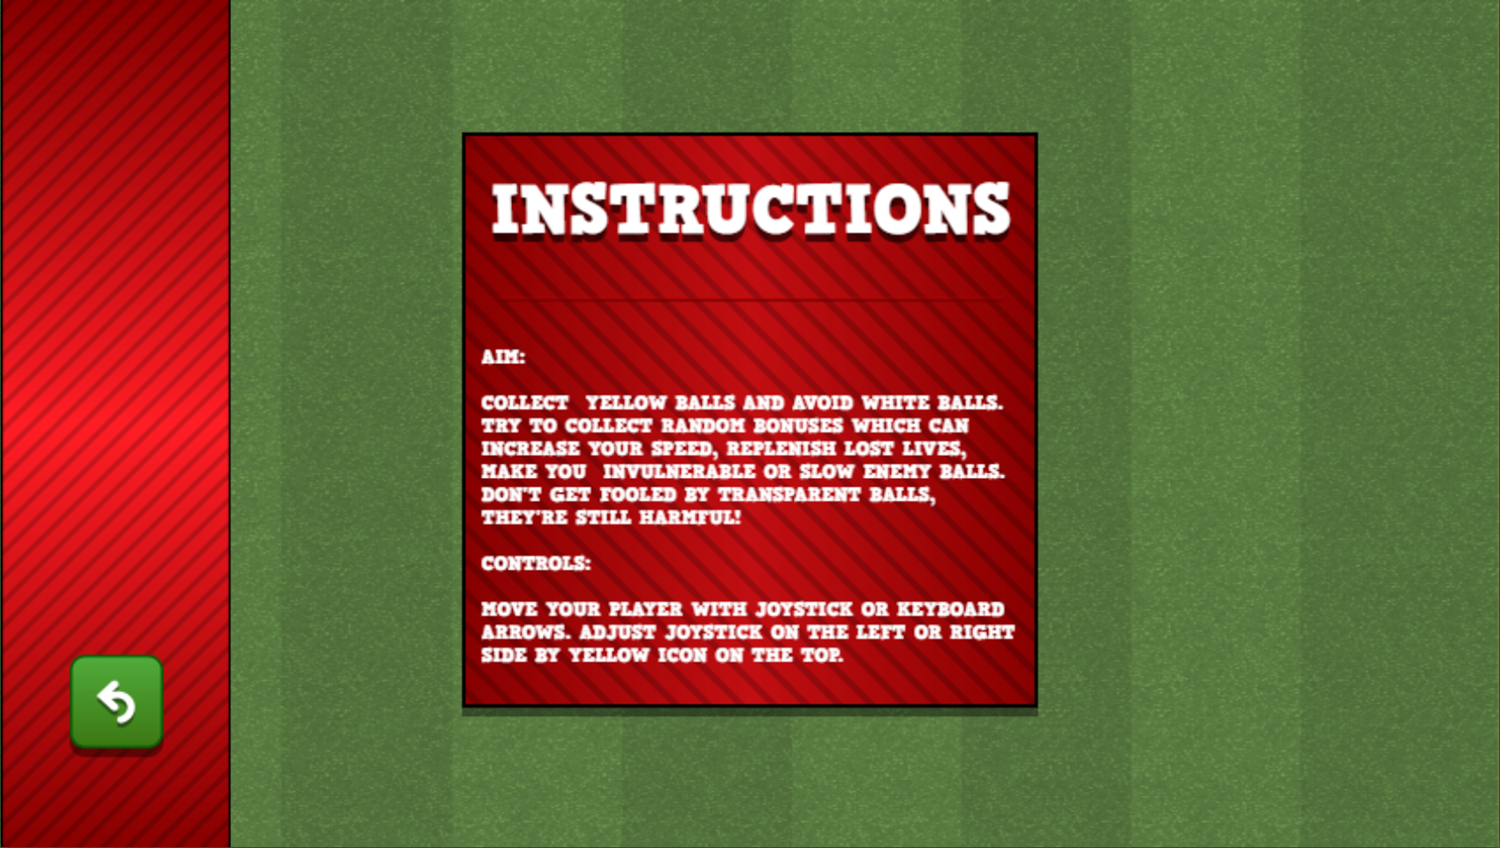 Football.io Game Instructions Screenshot.